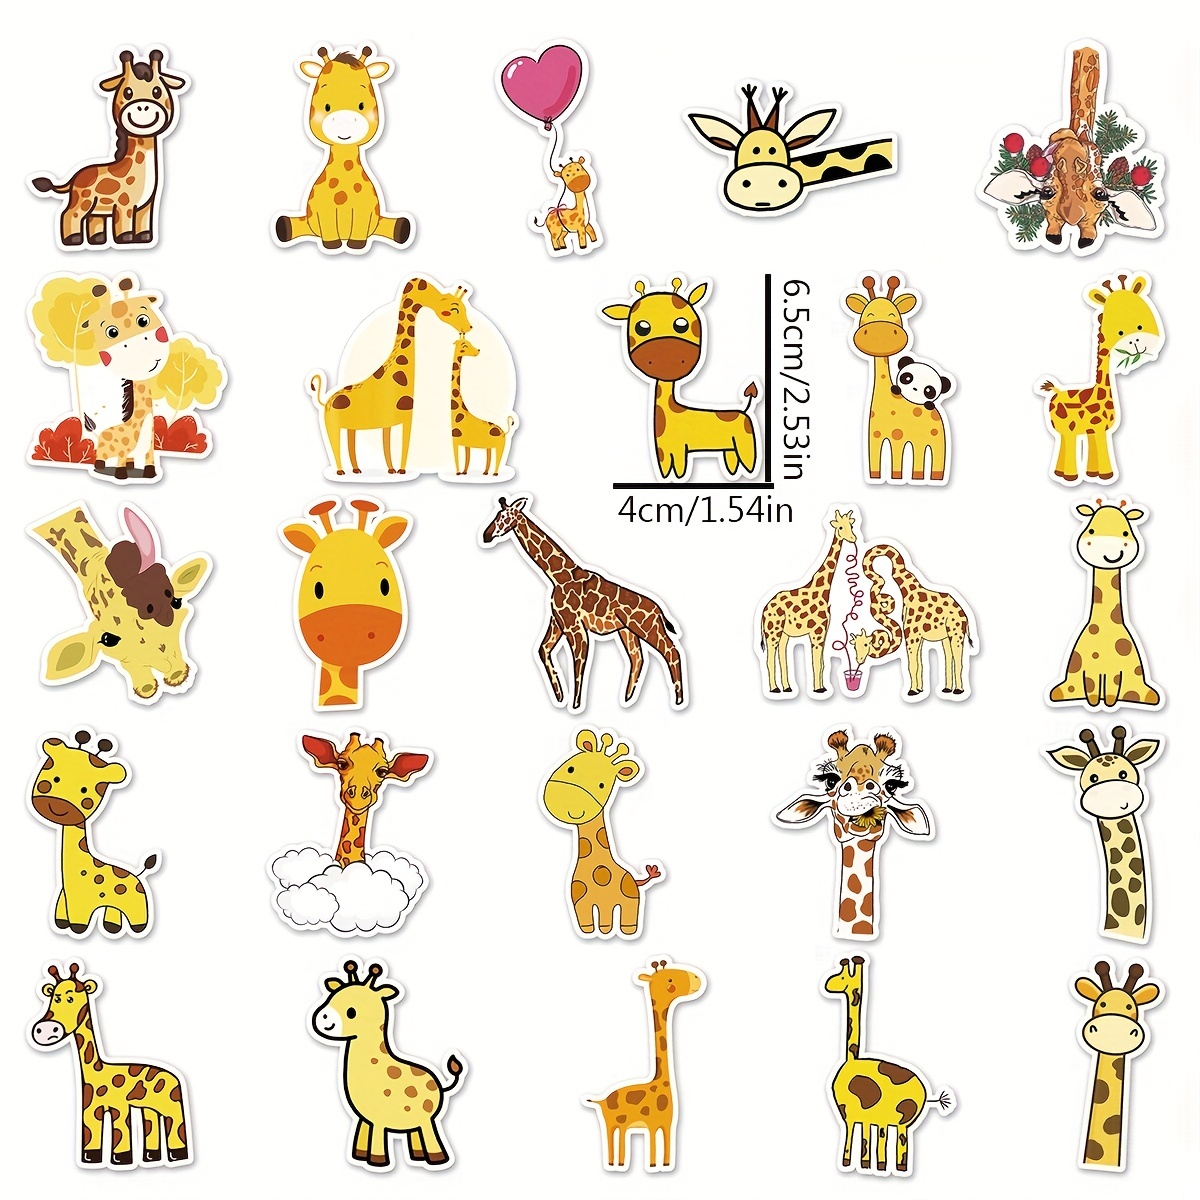 cute giraffe doodle